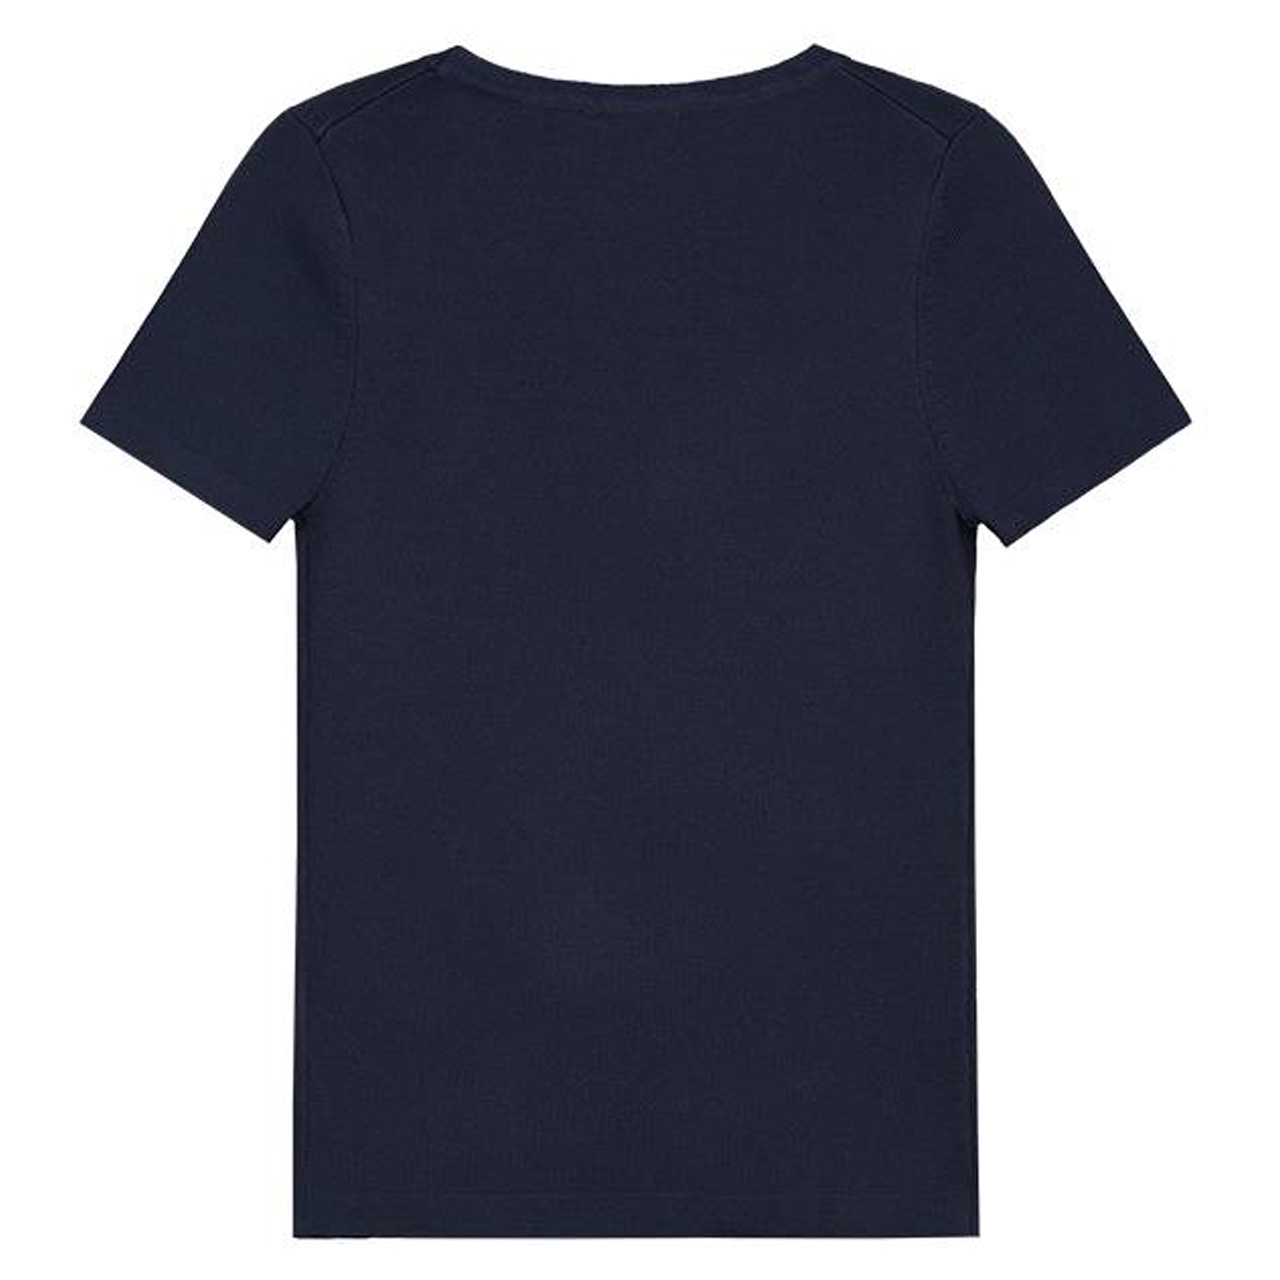 Nik & Girls Jolie Top Short Sleeve Donkerblauw - Tops & Singlets - Shirts - Meisjes - Irma